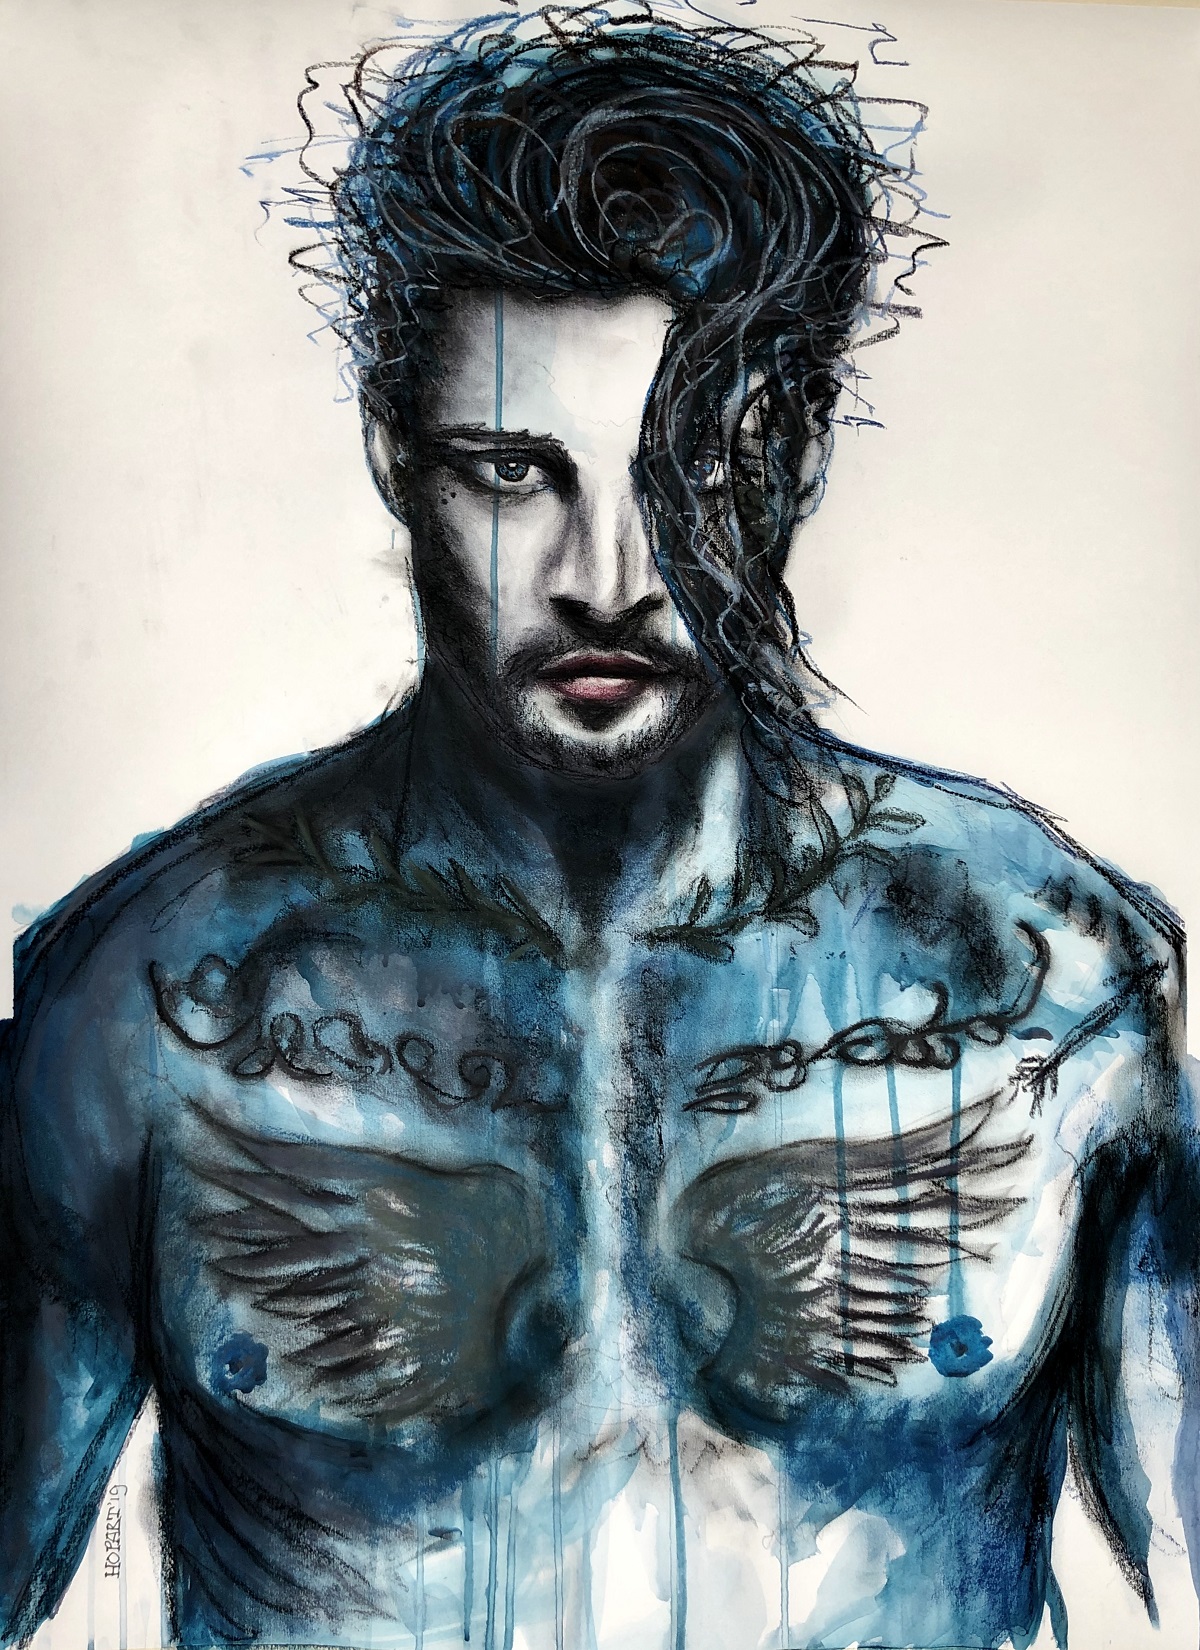 Man with tattoos, 50 x 70 cm